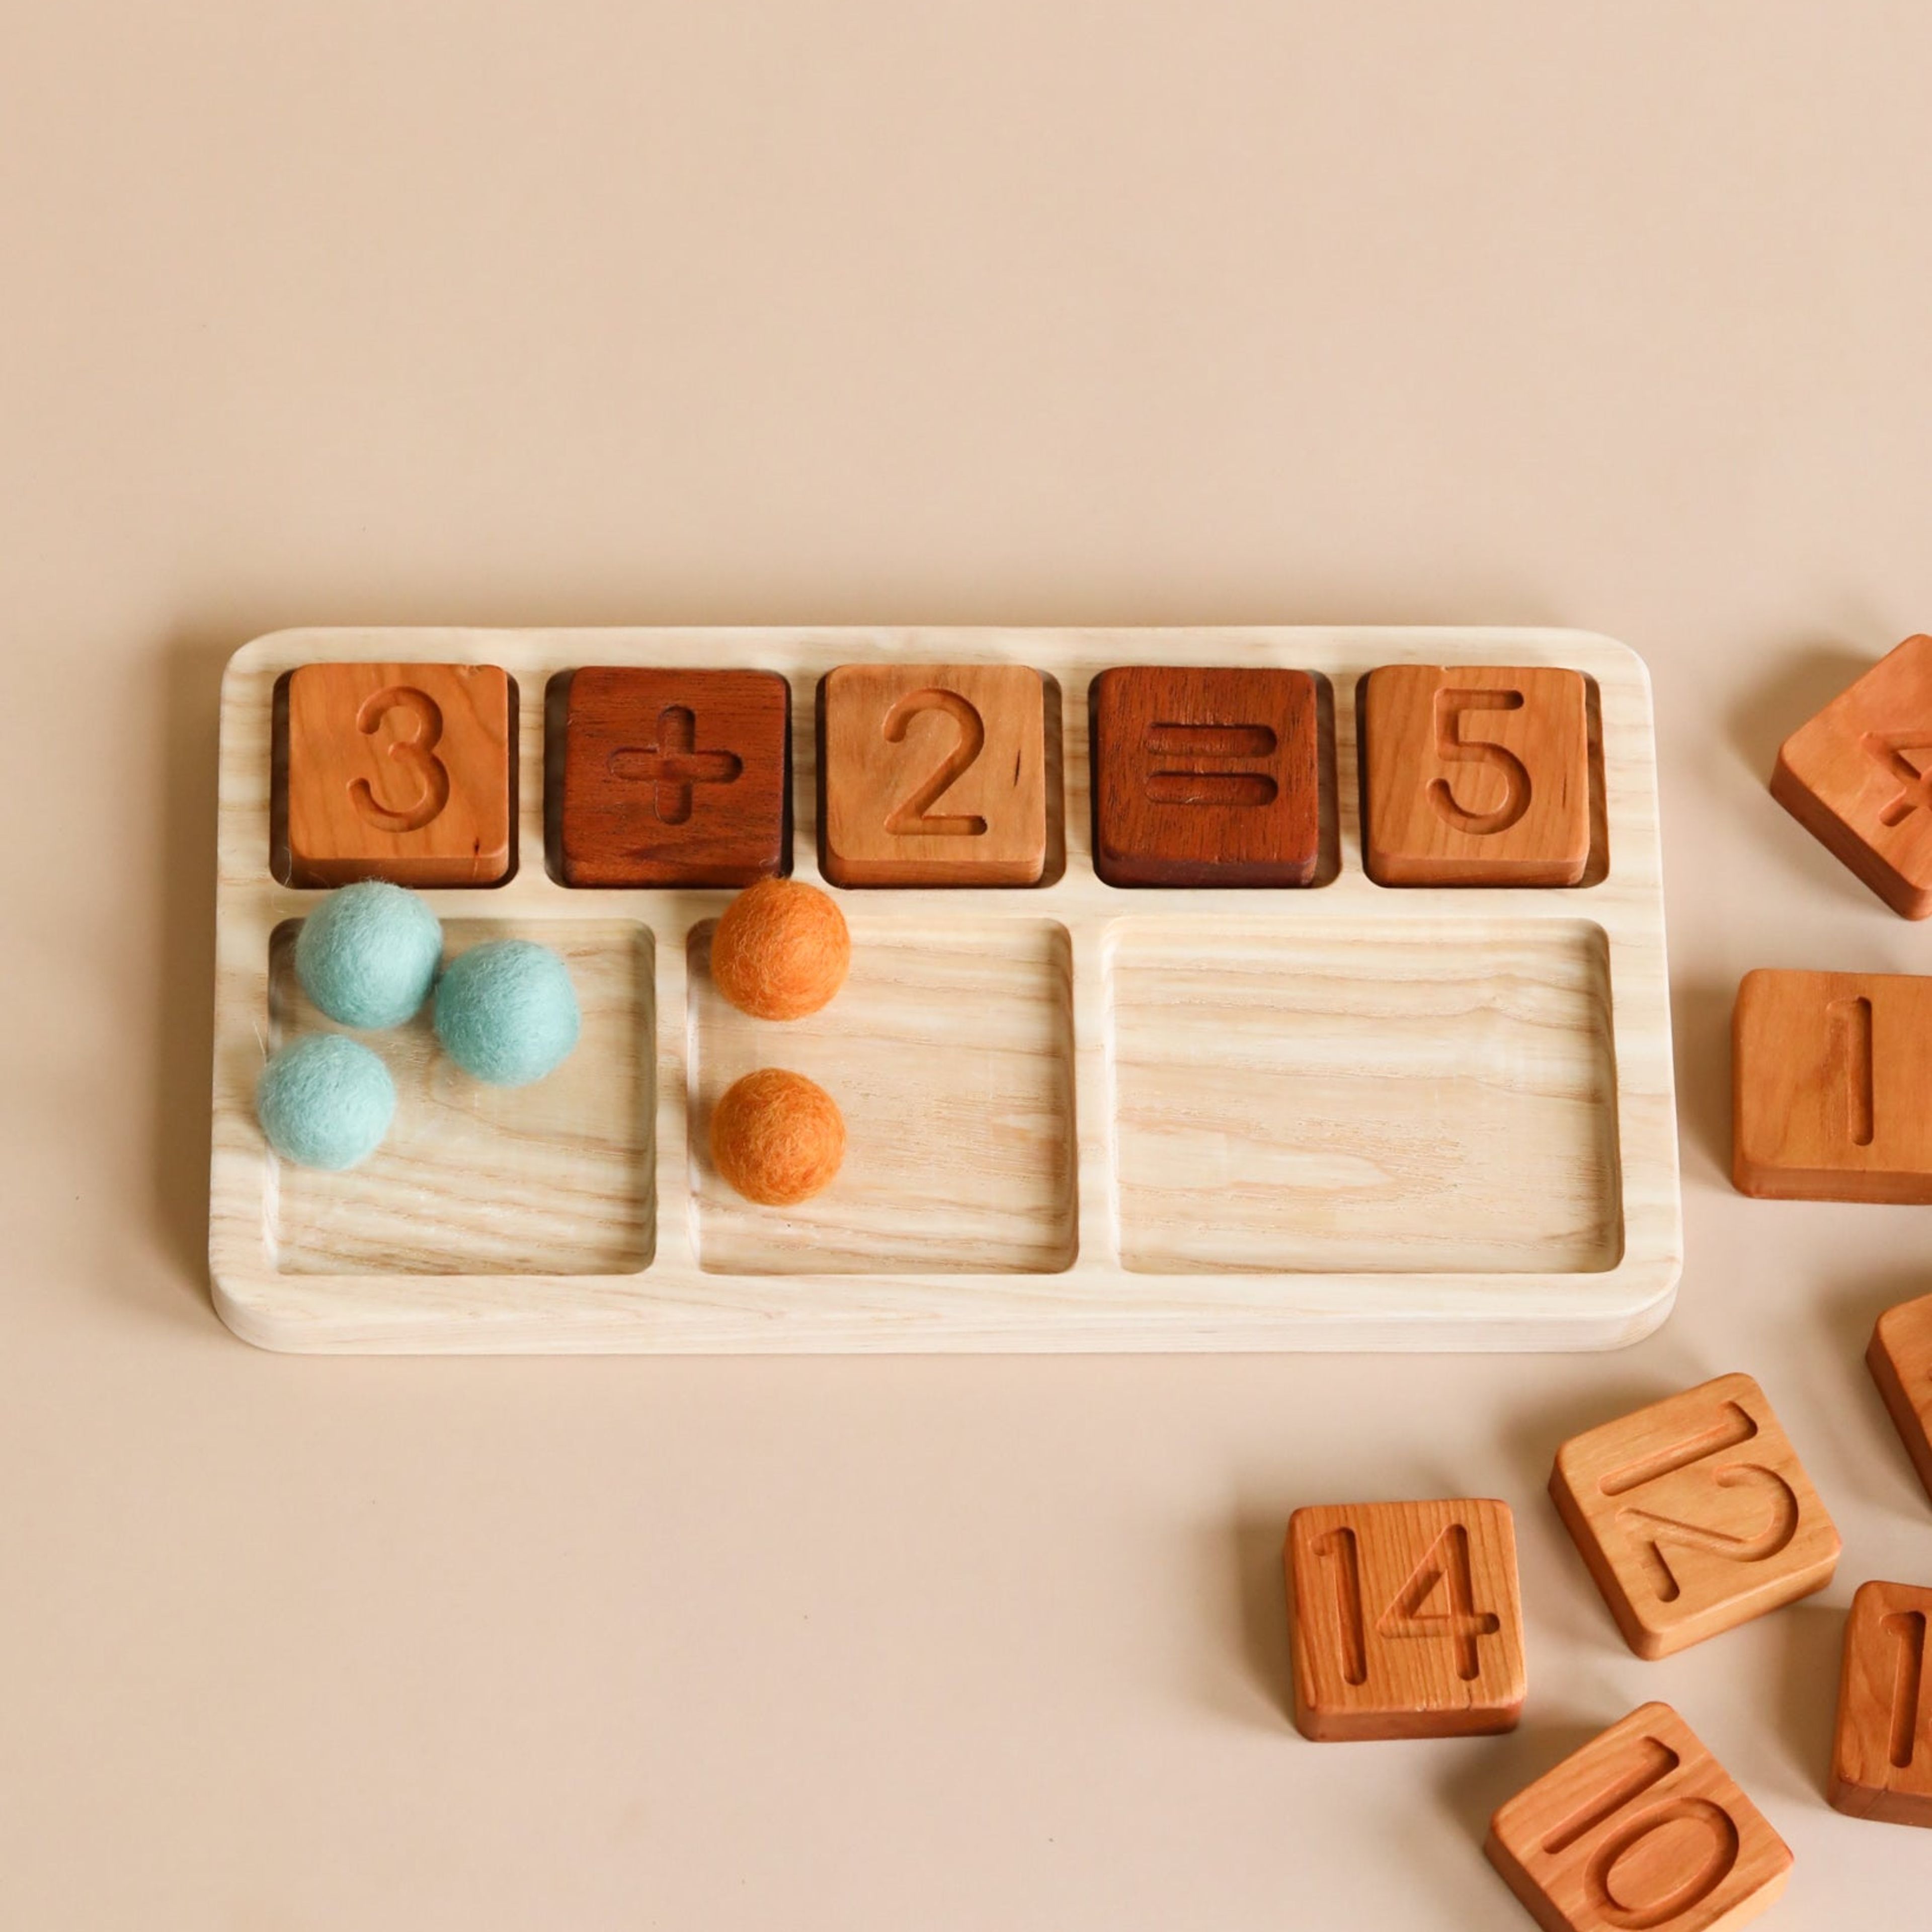 The Original Wooden Math Board - Made in USA